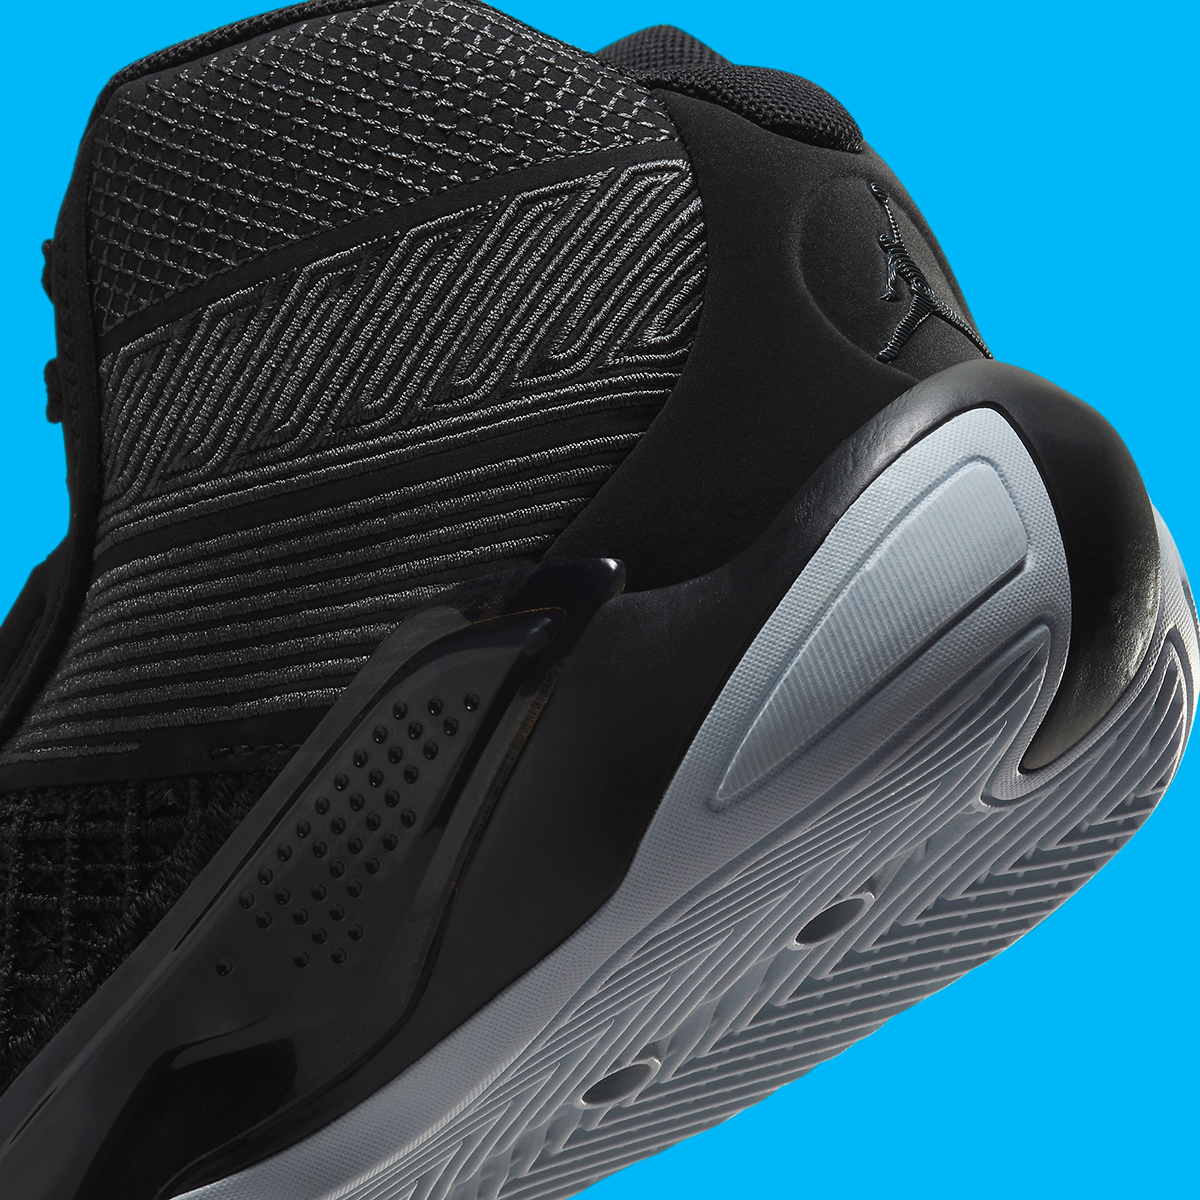 Atmos x The Air Jordan Puppy 1 Flyease Reaches For New Beginnings x Nike Gs Black University Blue Dz3499 004 9